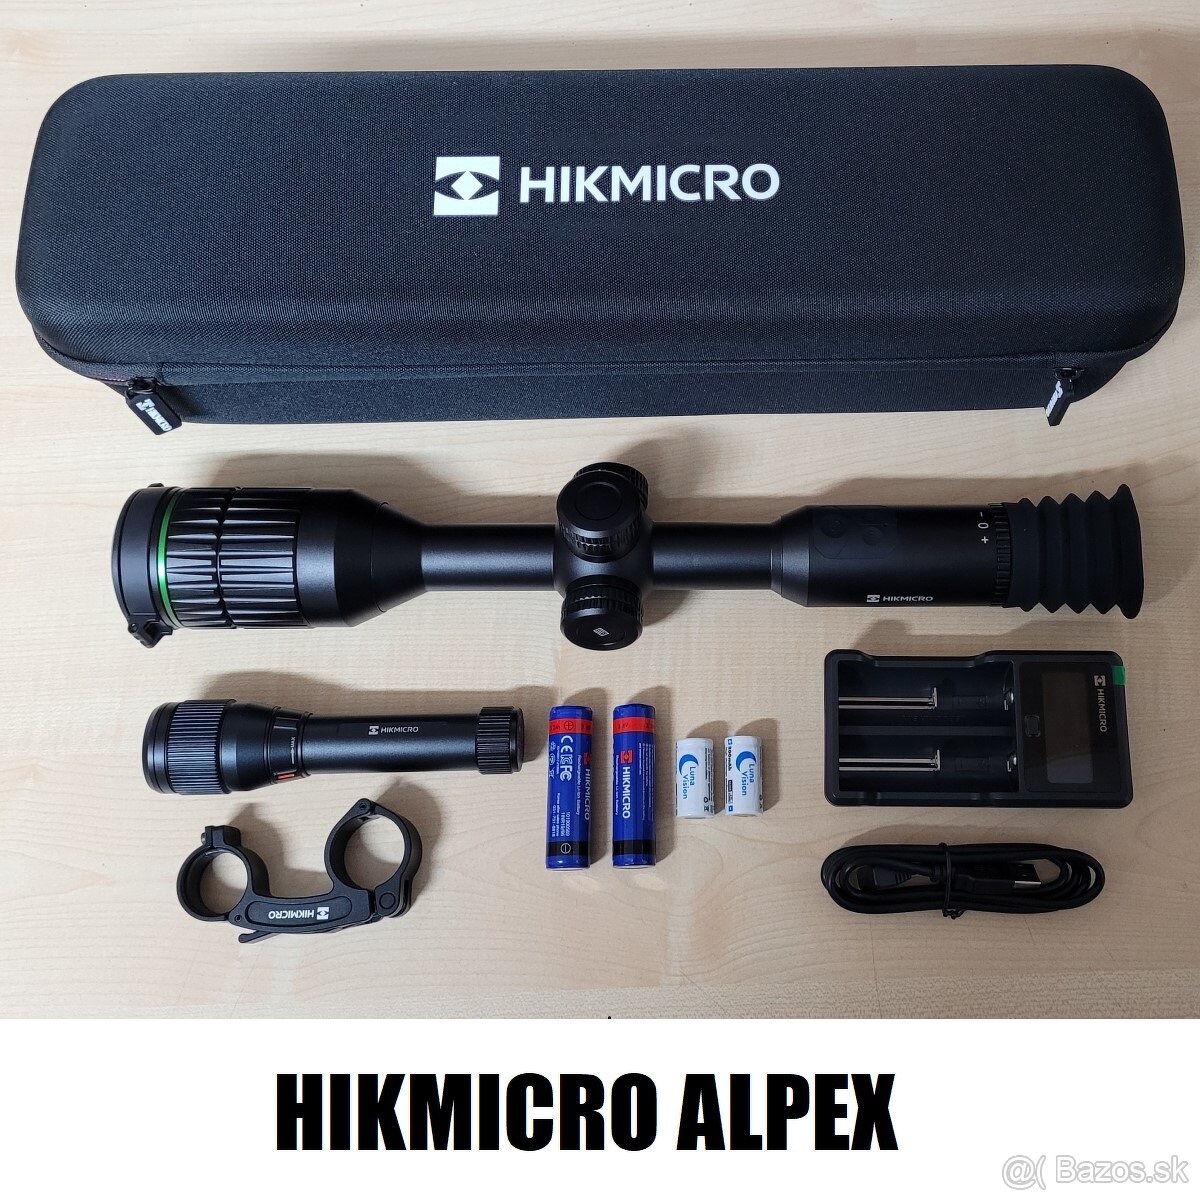 Hikmicro alpex